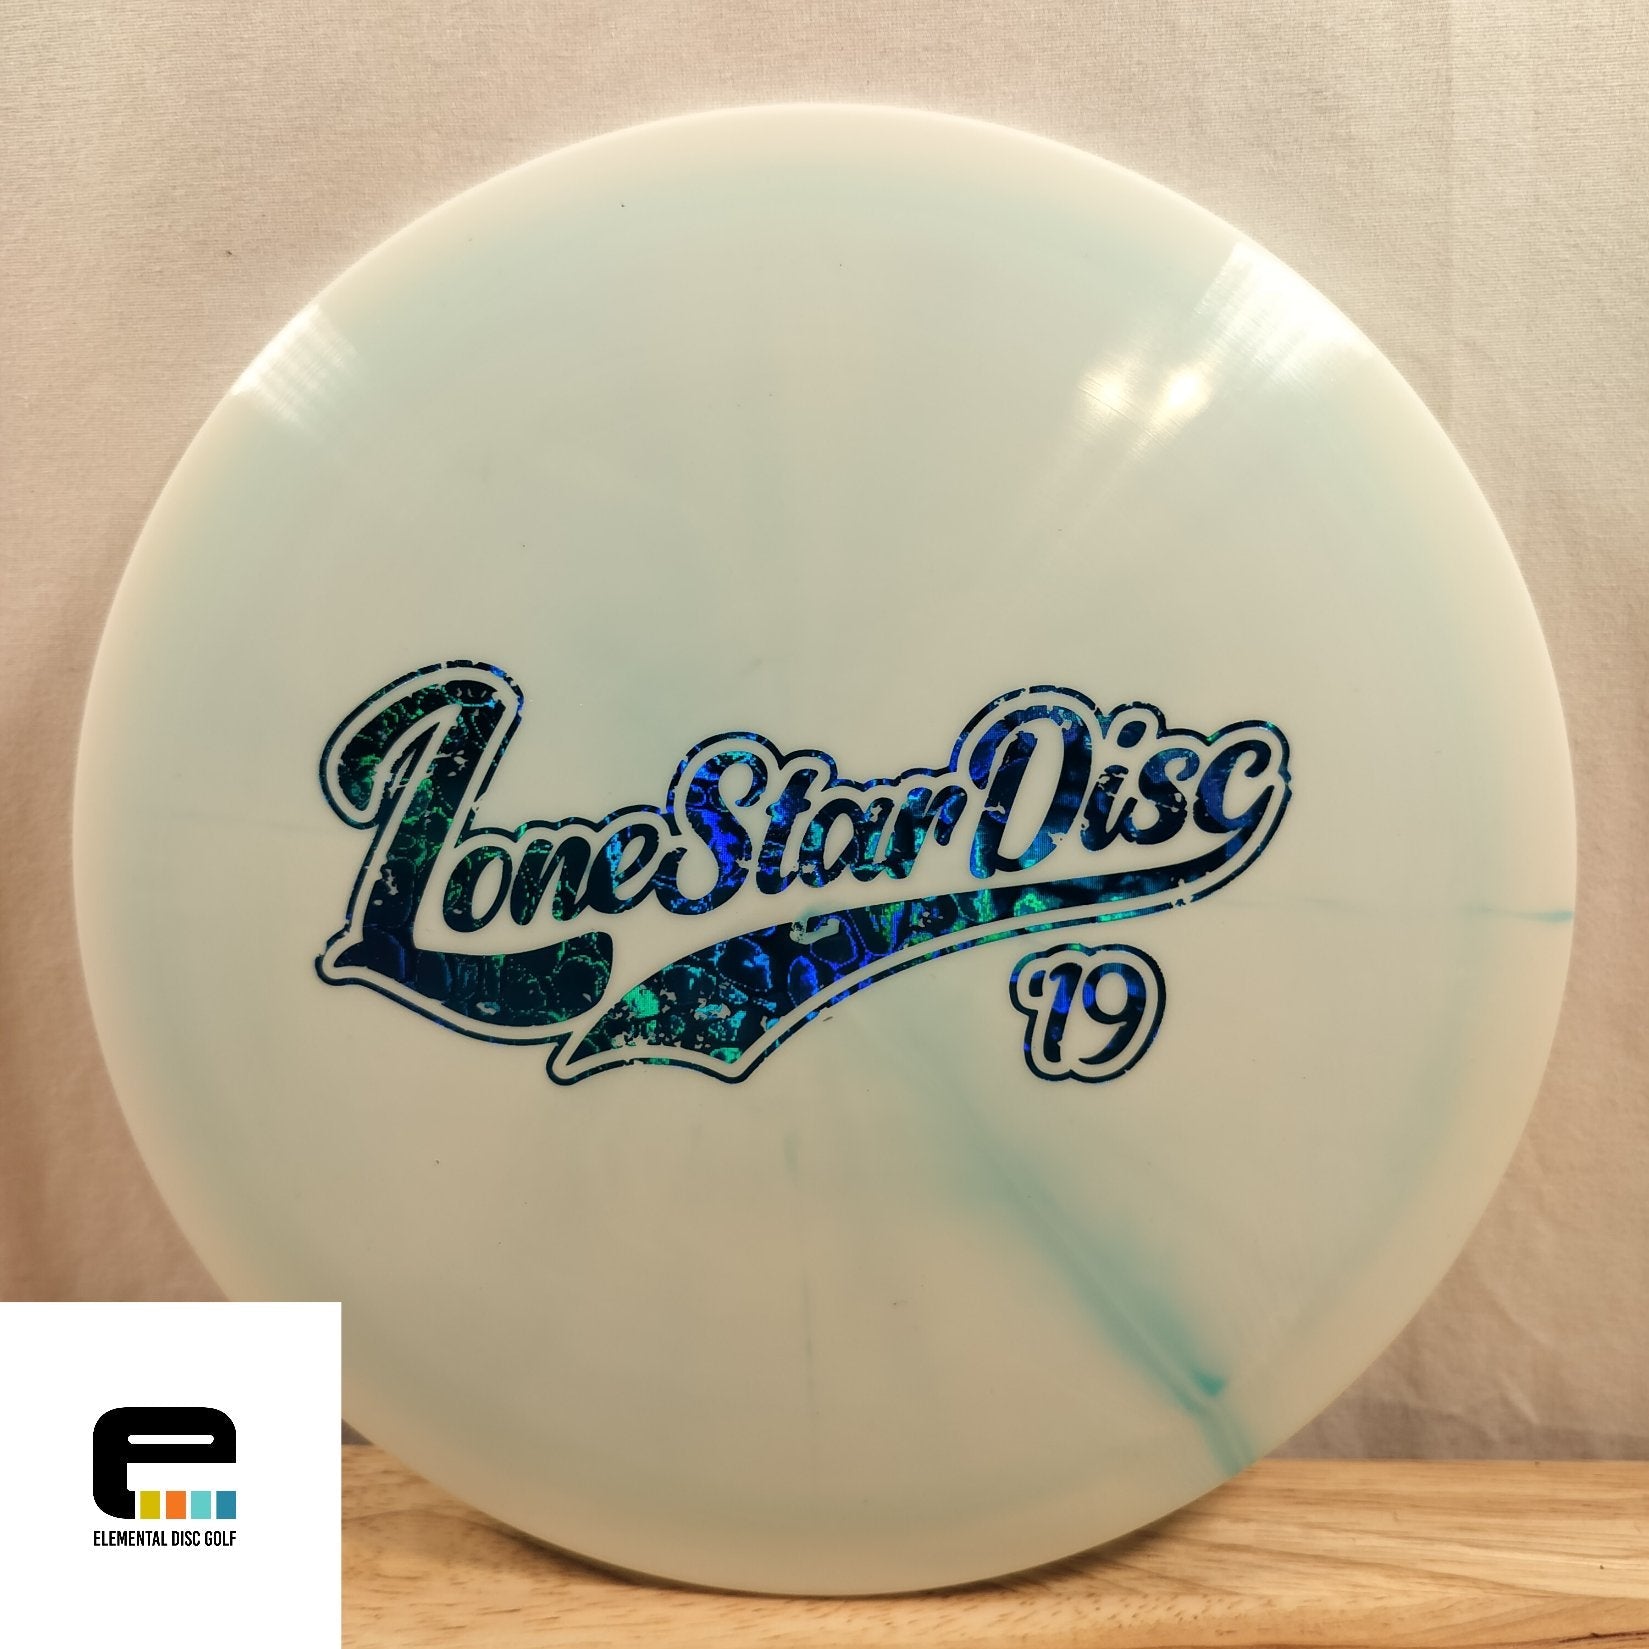 Lone Star Discs - Elemental Disc Golf